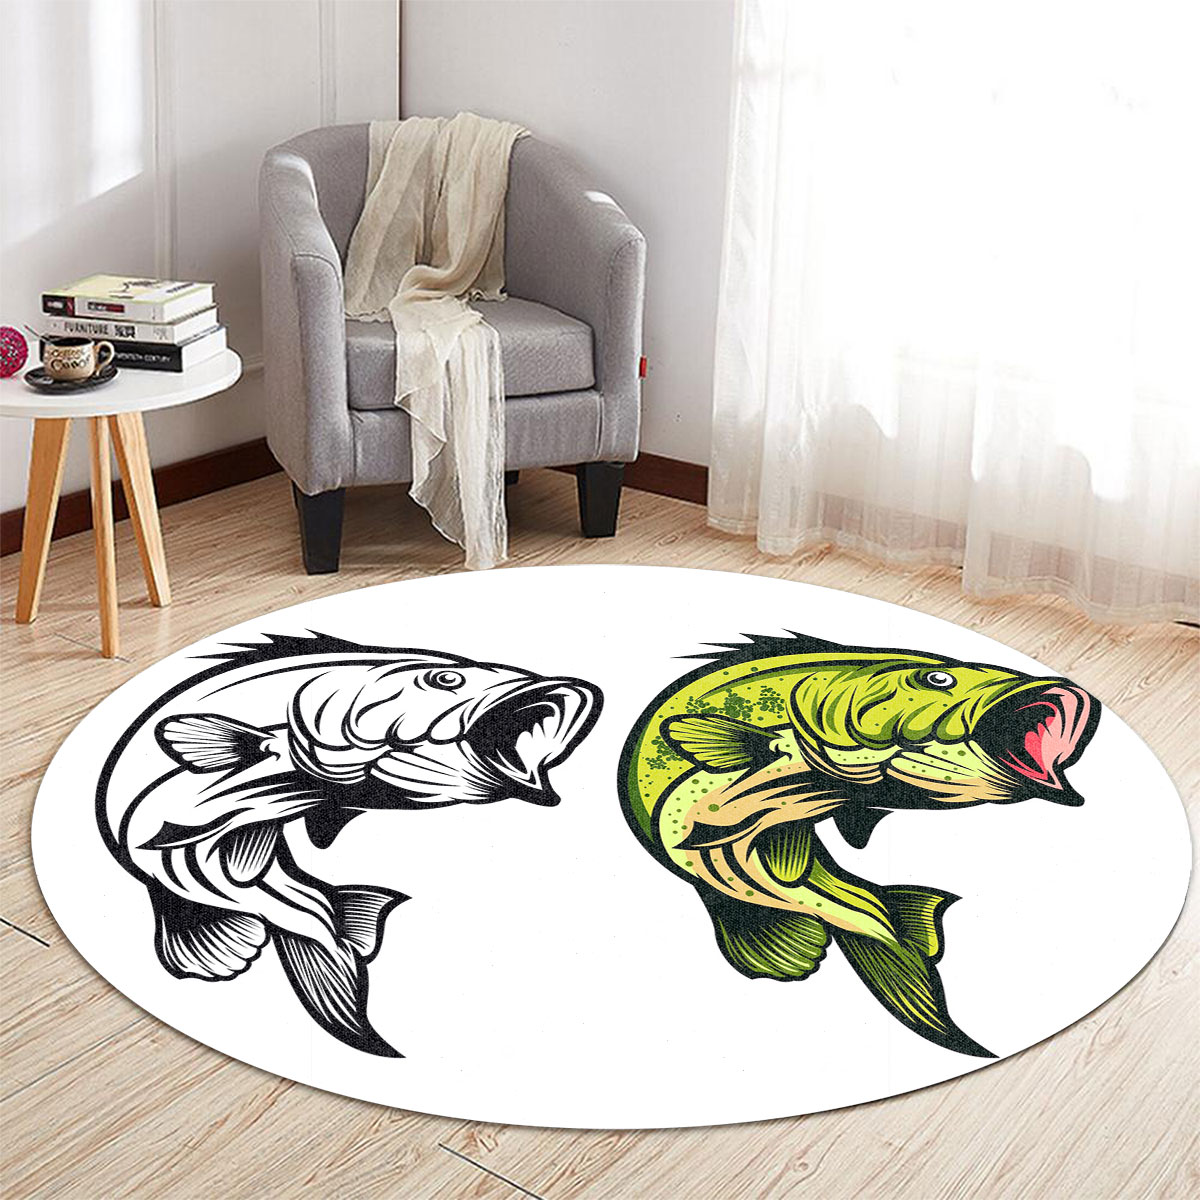 Double Bass Fish Round Carpet